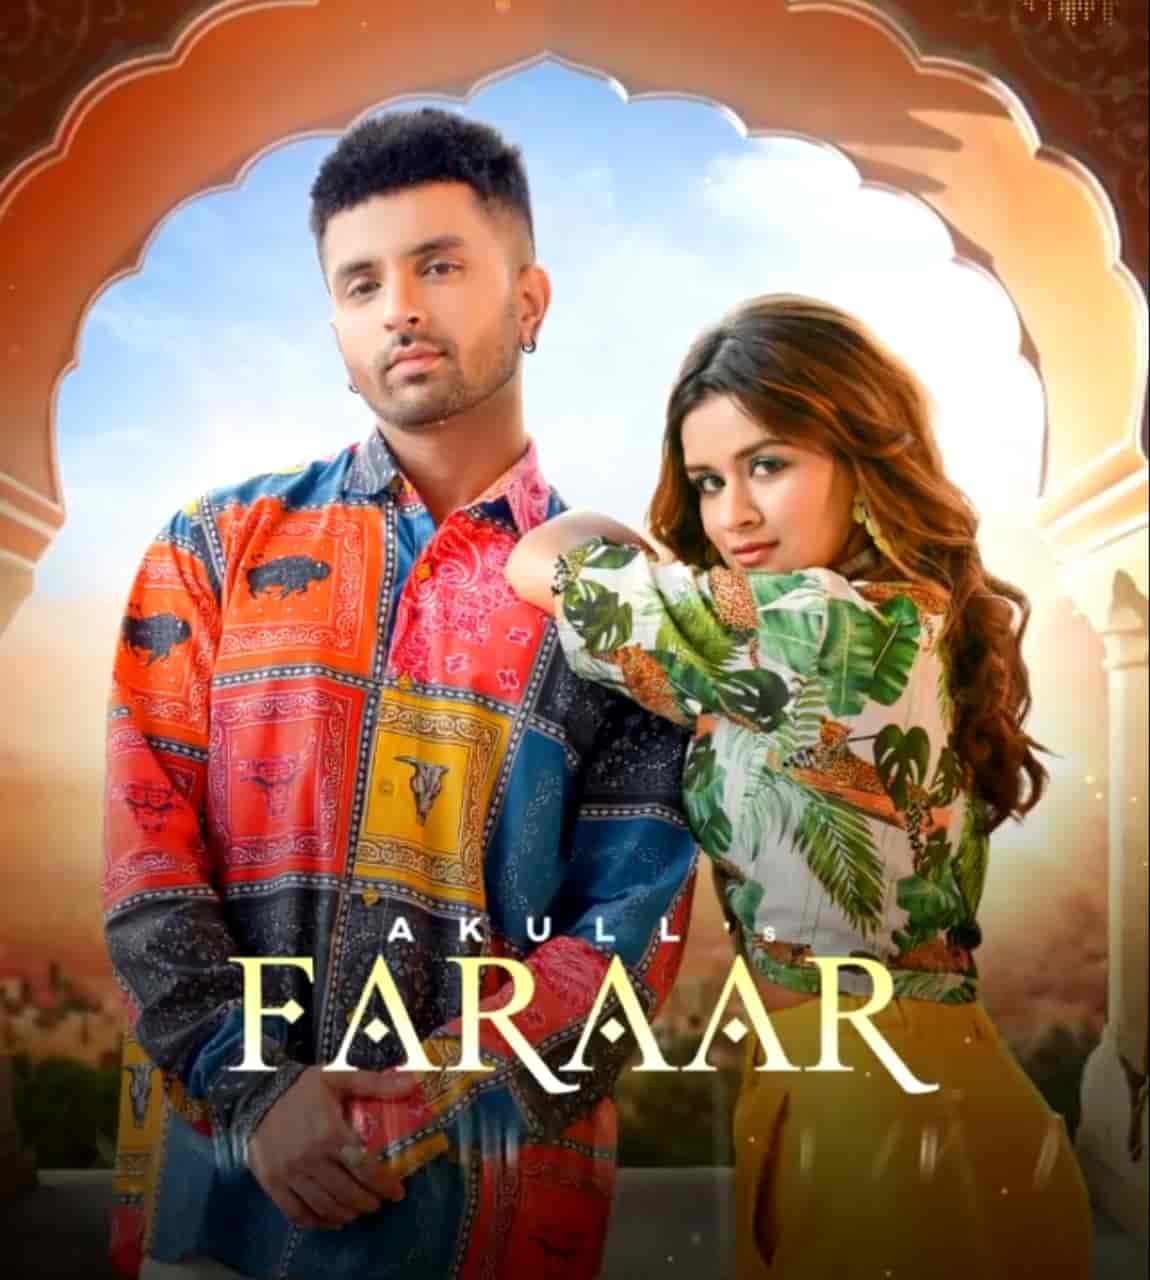 Faraar Punjabi Song Image Features Akull And Avneet Kaur